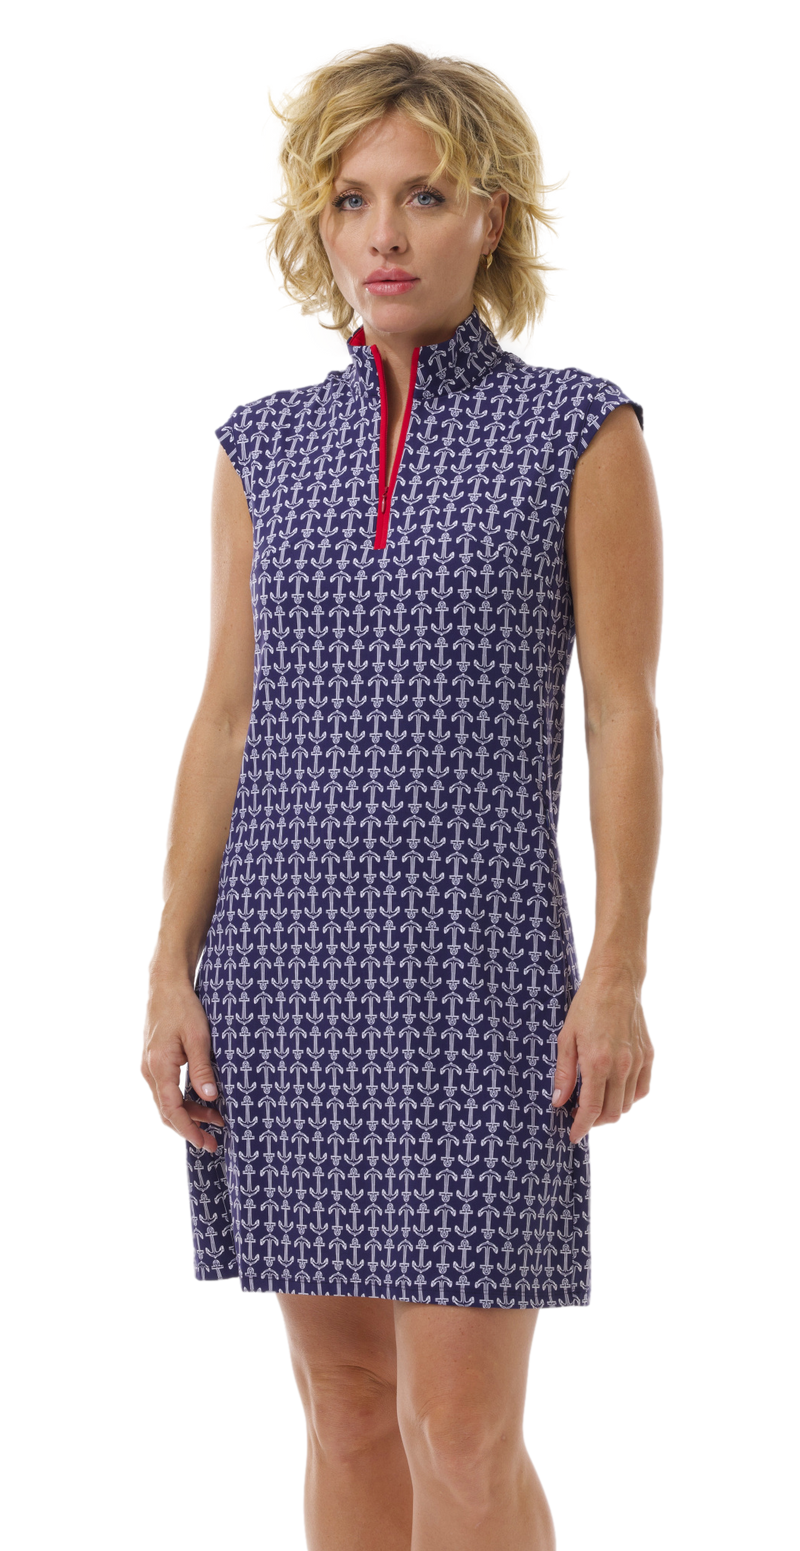 SanSoleil: Ladies UPF 50 SolStyle Cool ICE Sleeveless Zip Mock Dress - 900722I